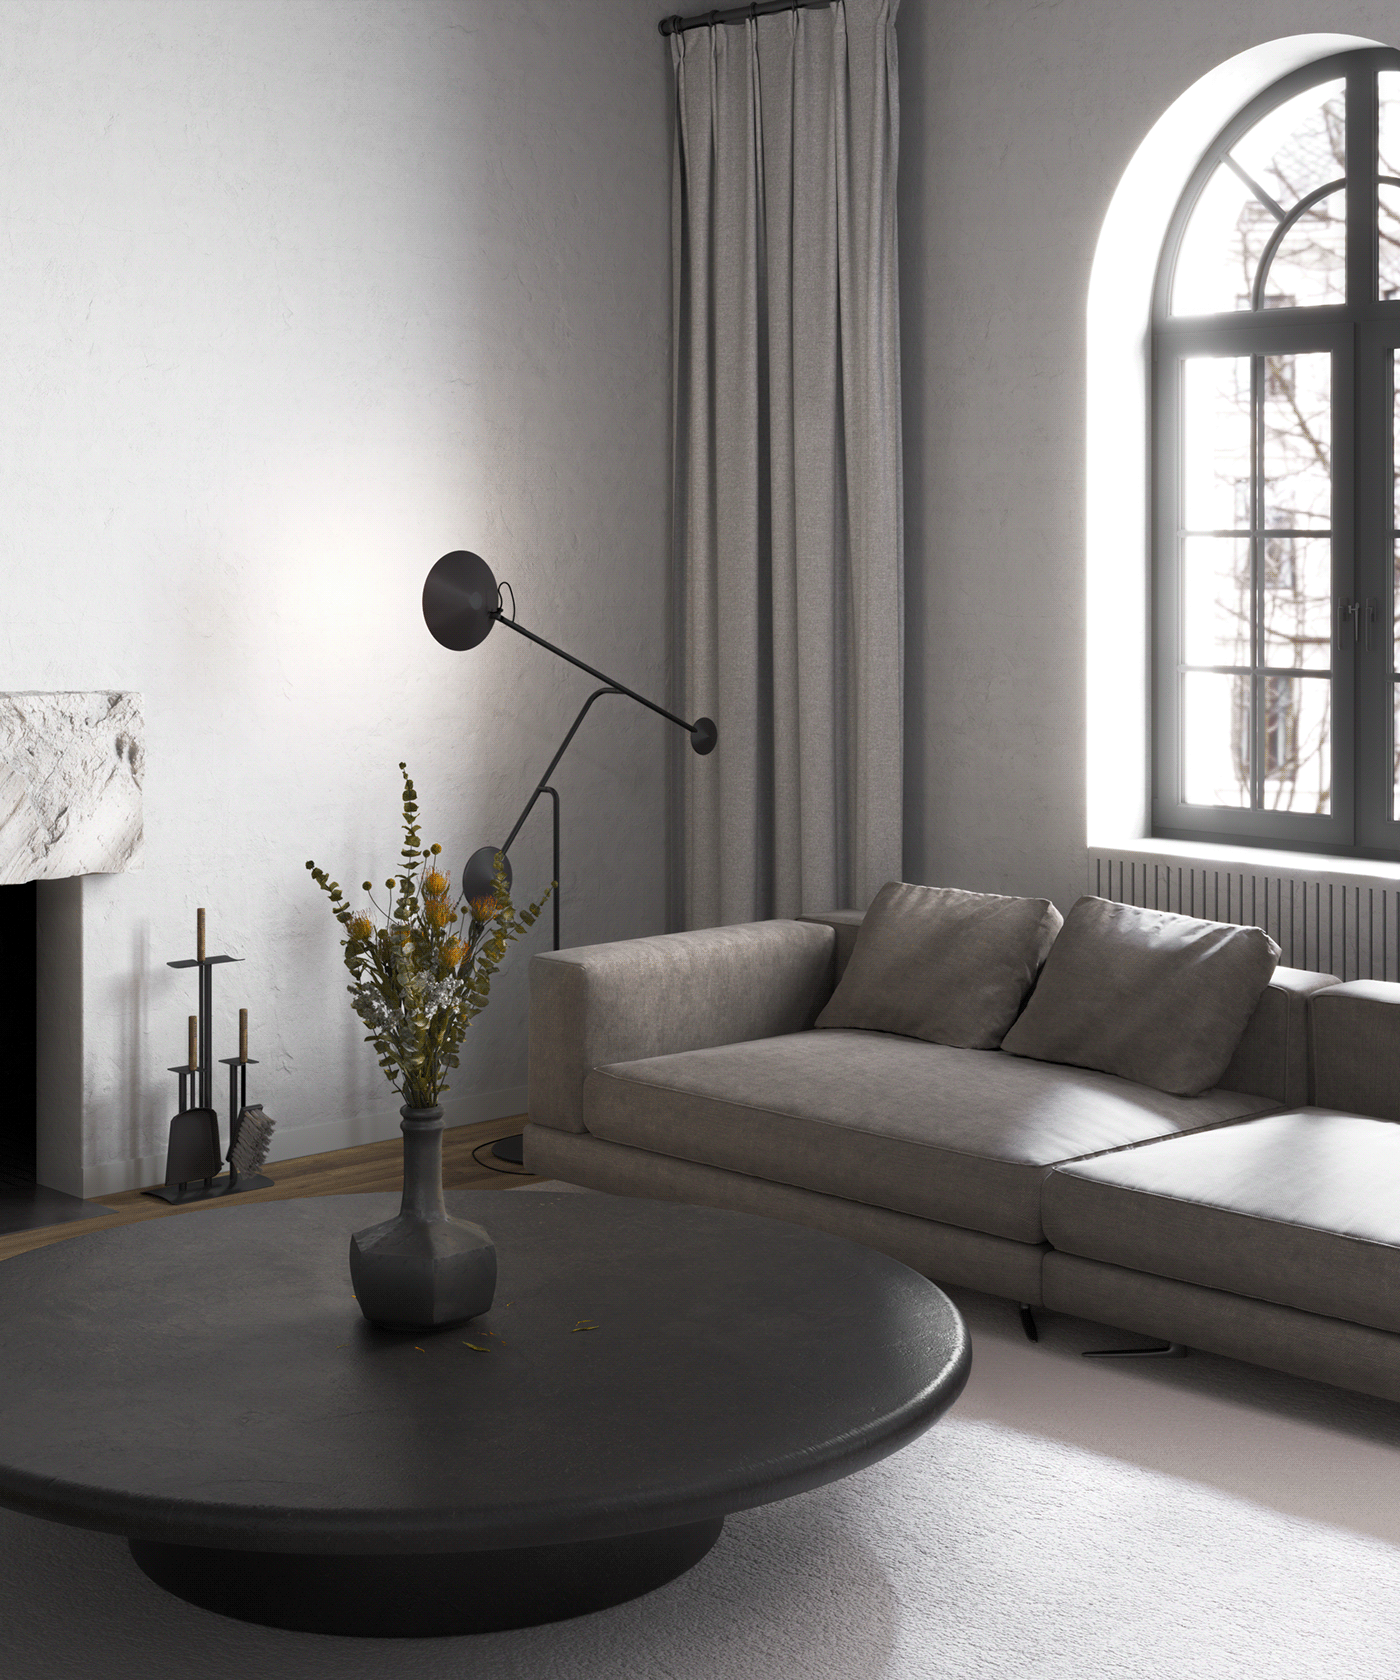 3D 3ds max architecture corona Interior kitchen living room Render visualization